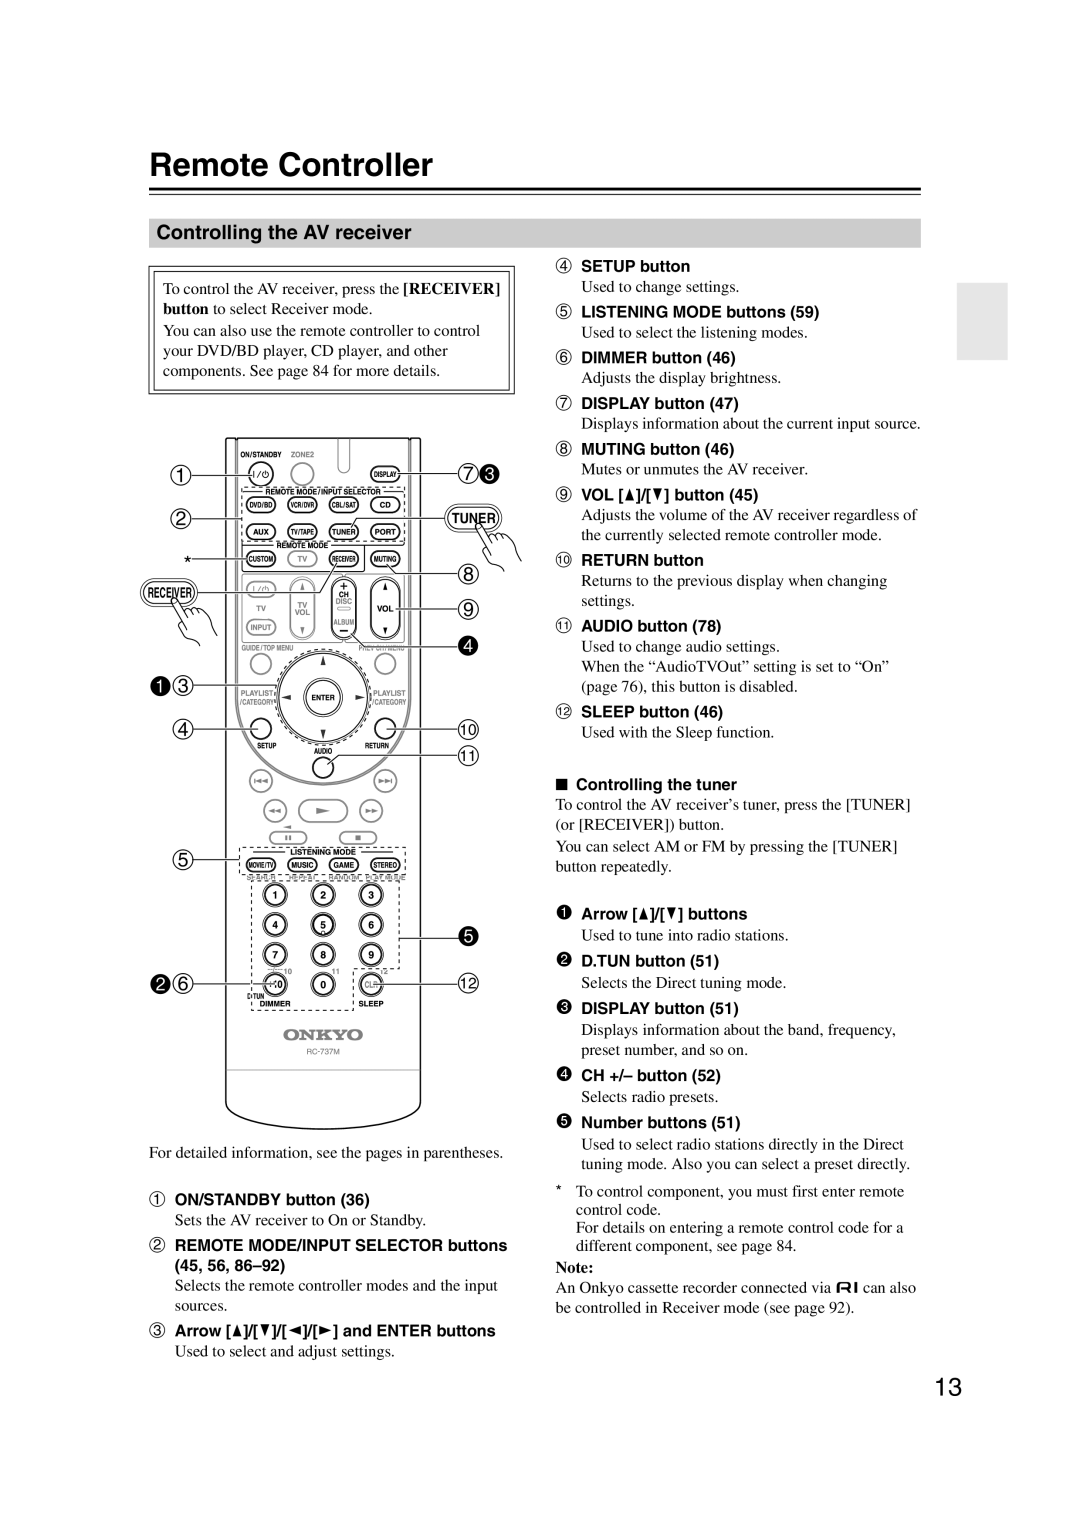 Onkyo SR507, TX-SR577 instruction manual Remote Controller, Controlling the AV receiver, 4 1c 